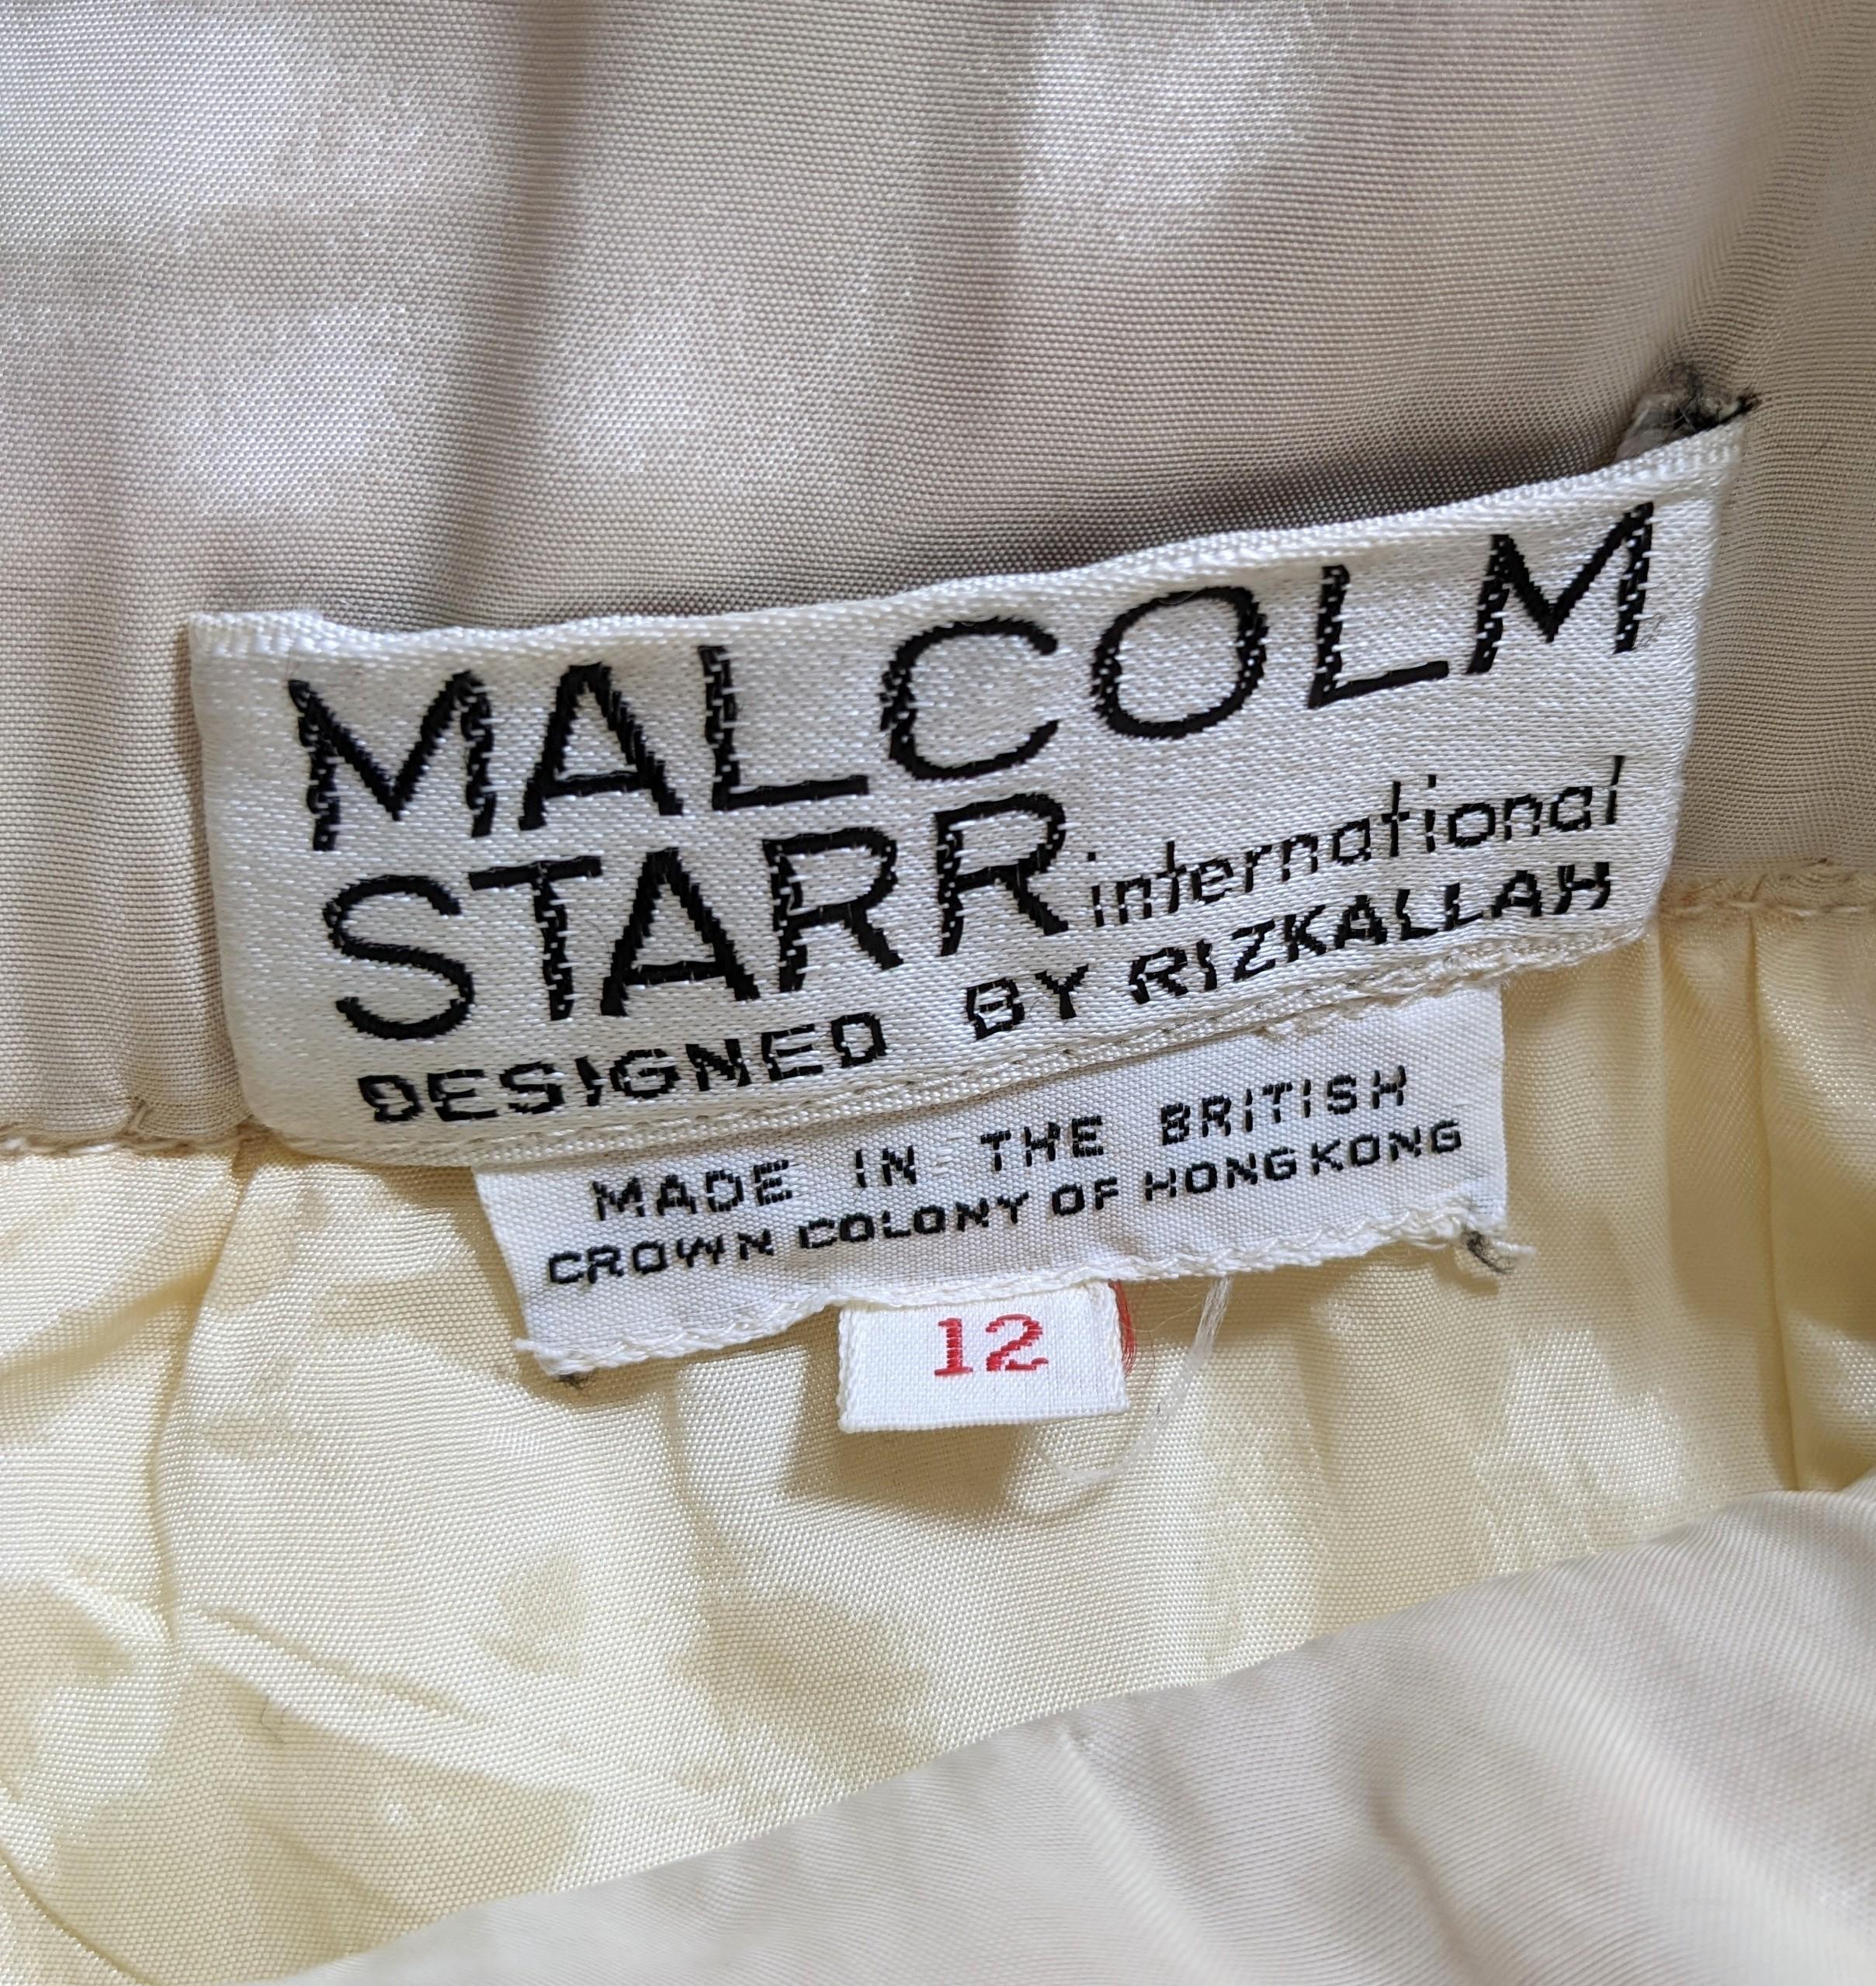 Malcom Starr Circus Themed Hostess Skirt 3